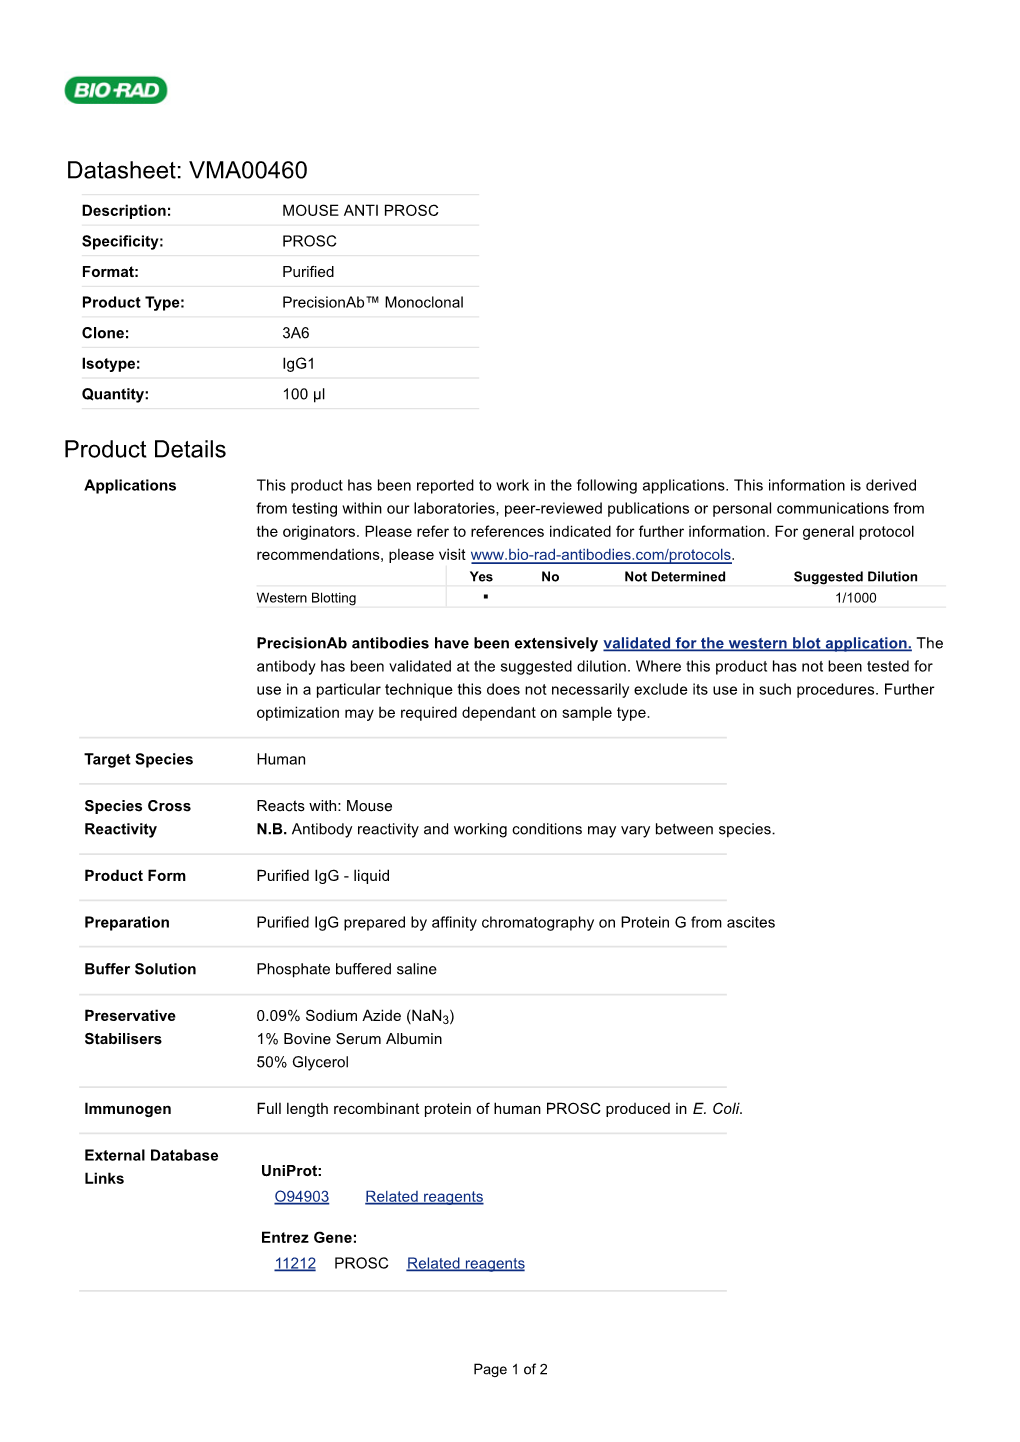 Datasheet: VMA00460 Product Details